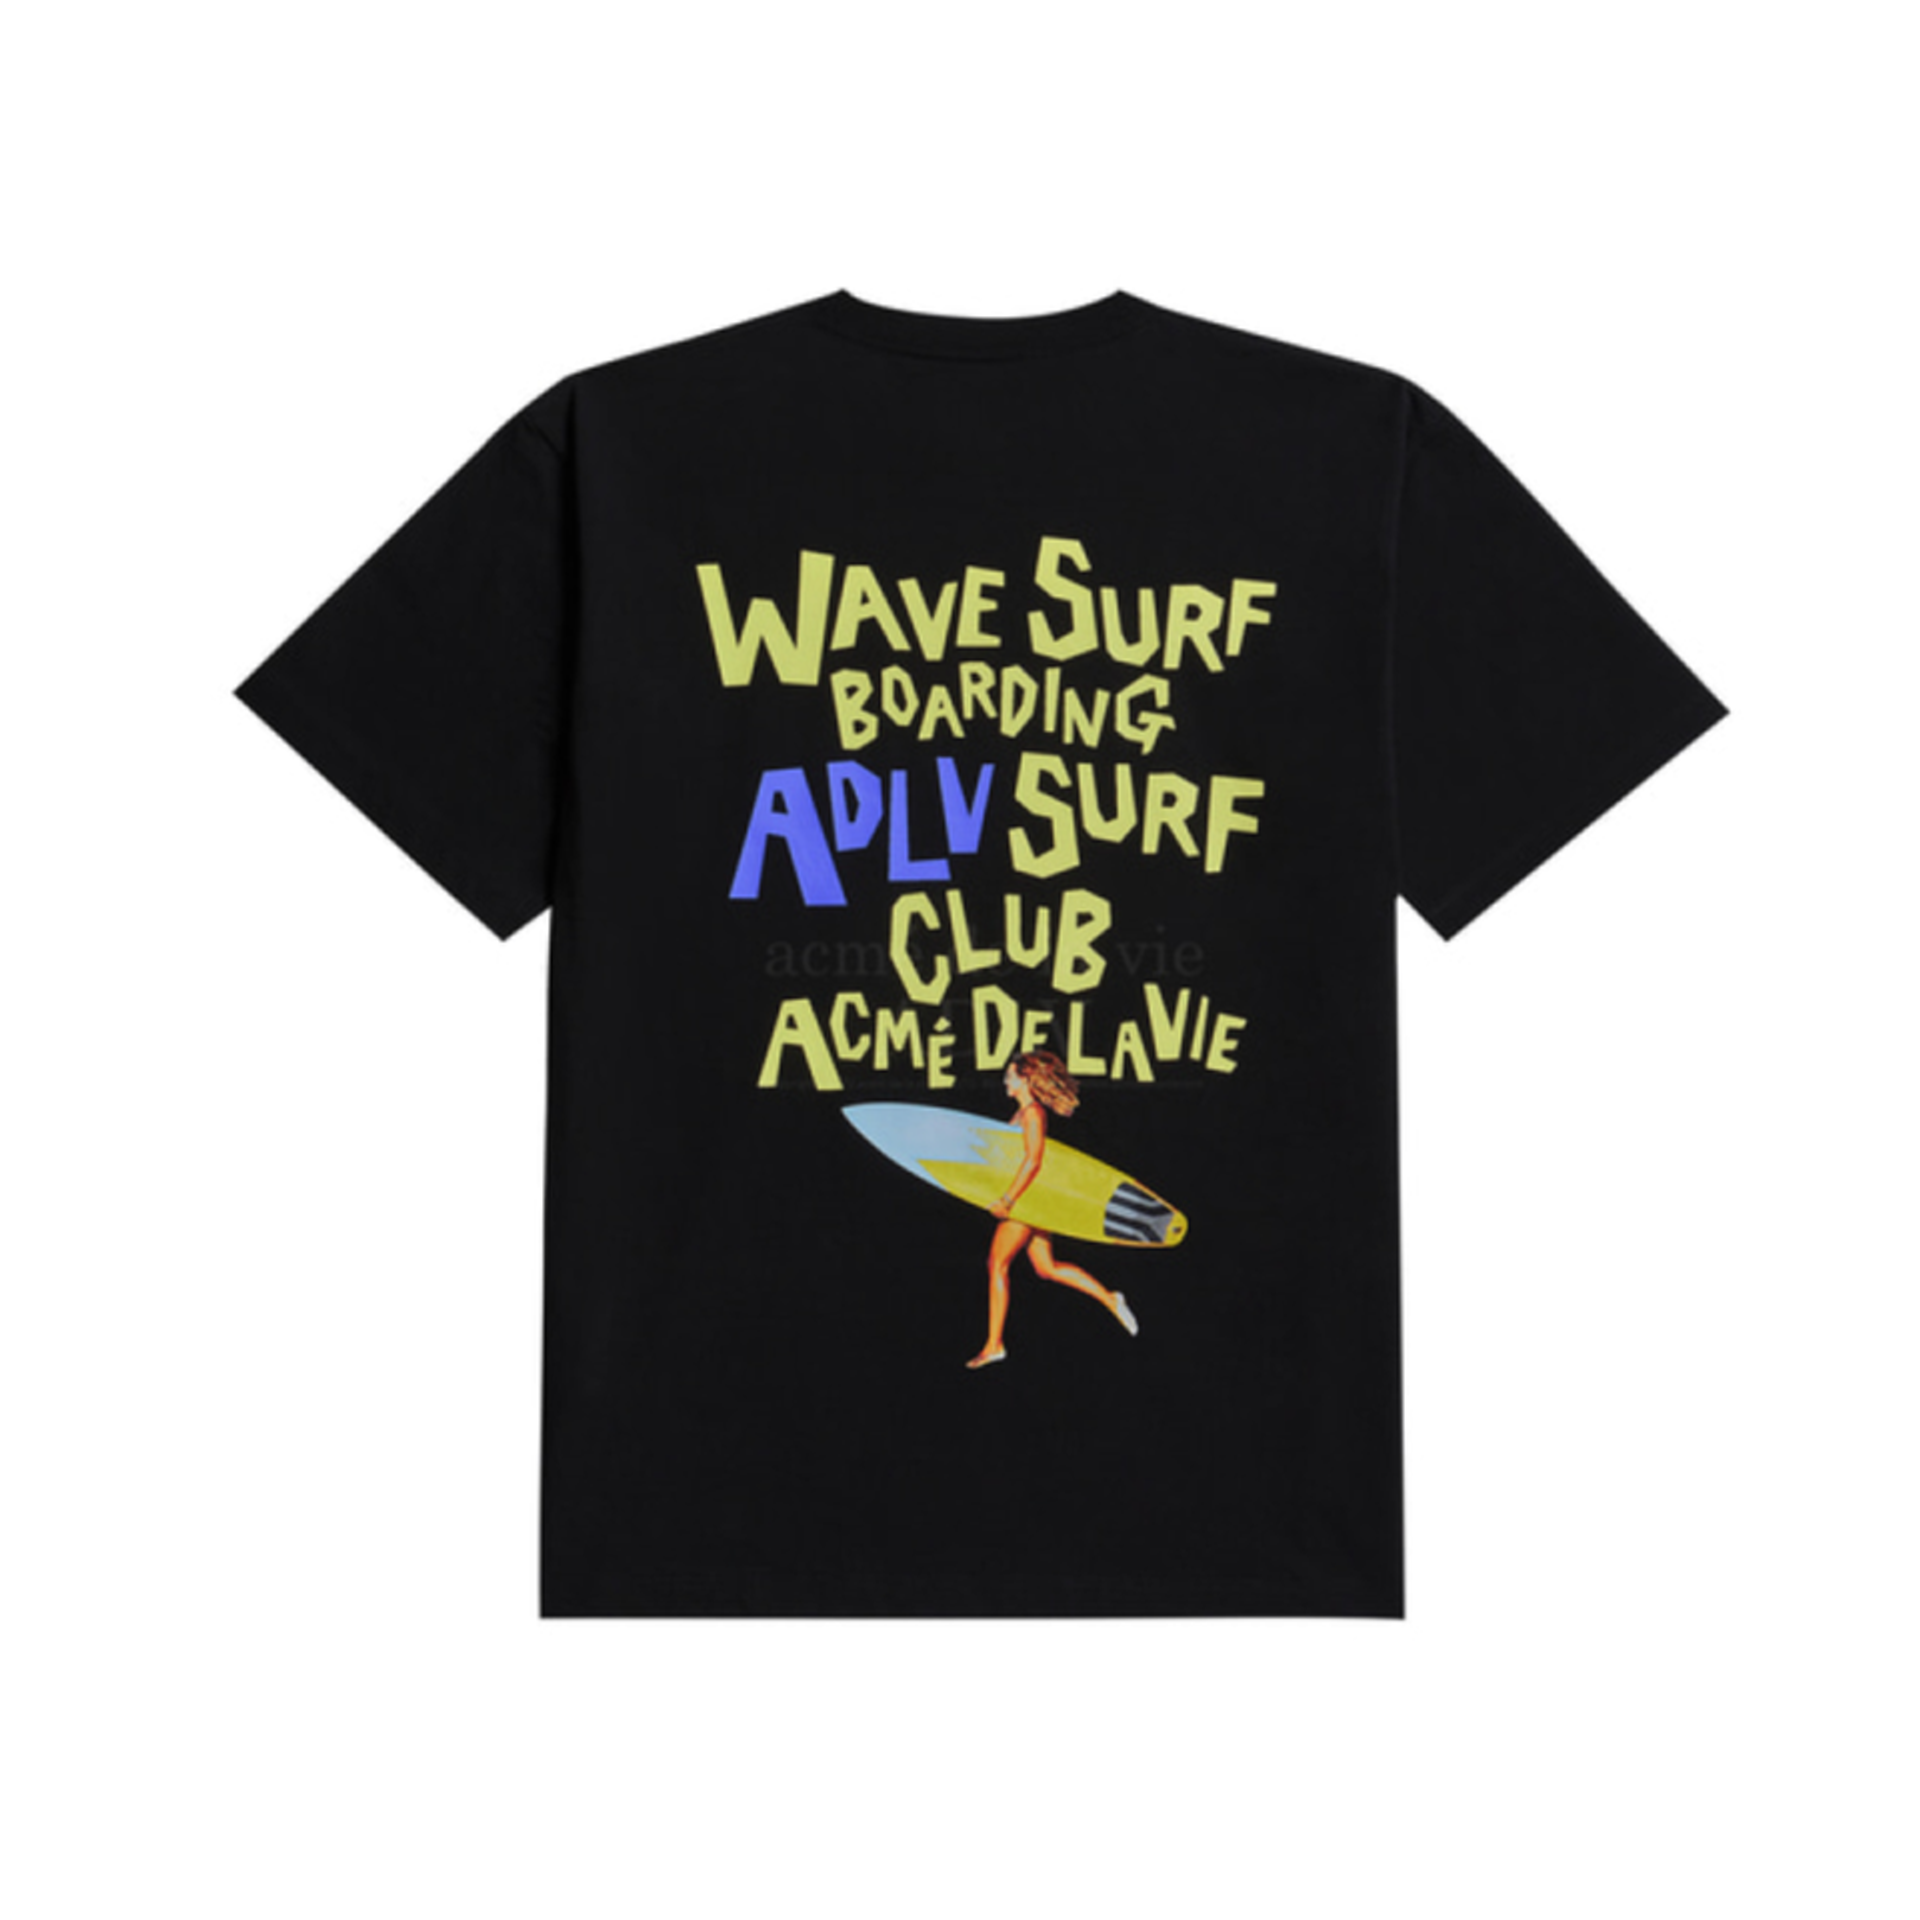 Acme De La Vie Surfing Girl Short Sleeve T-Shirt Black 